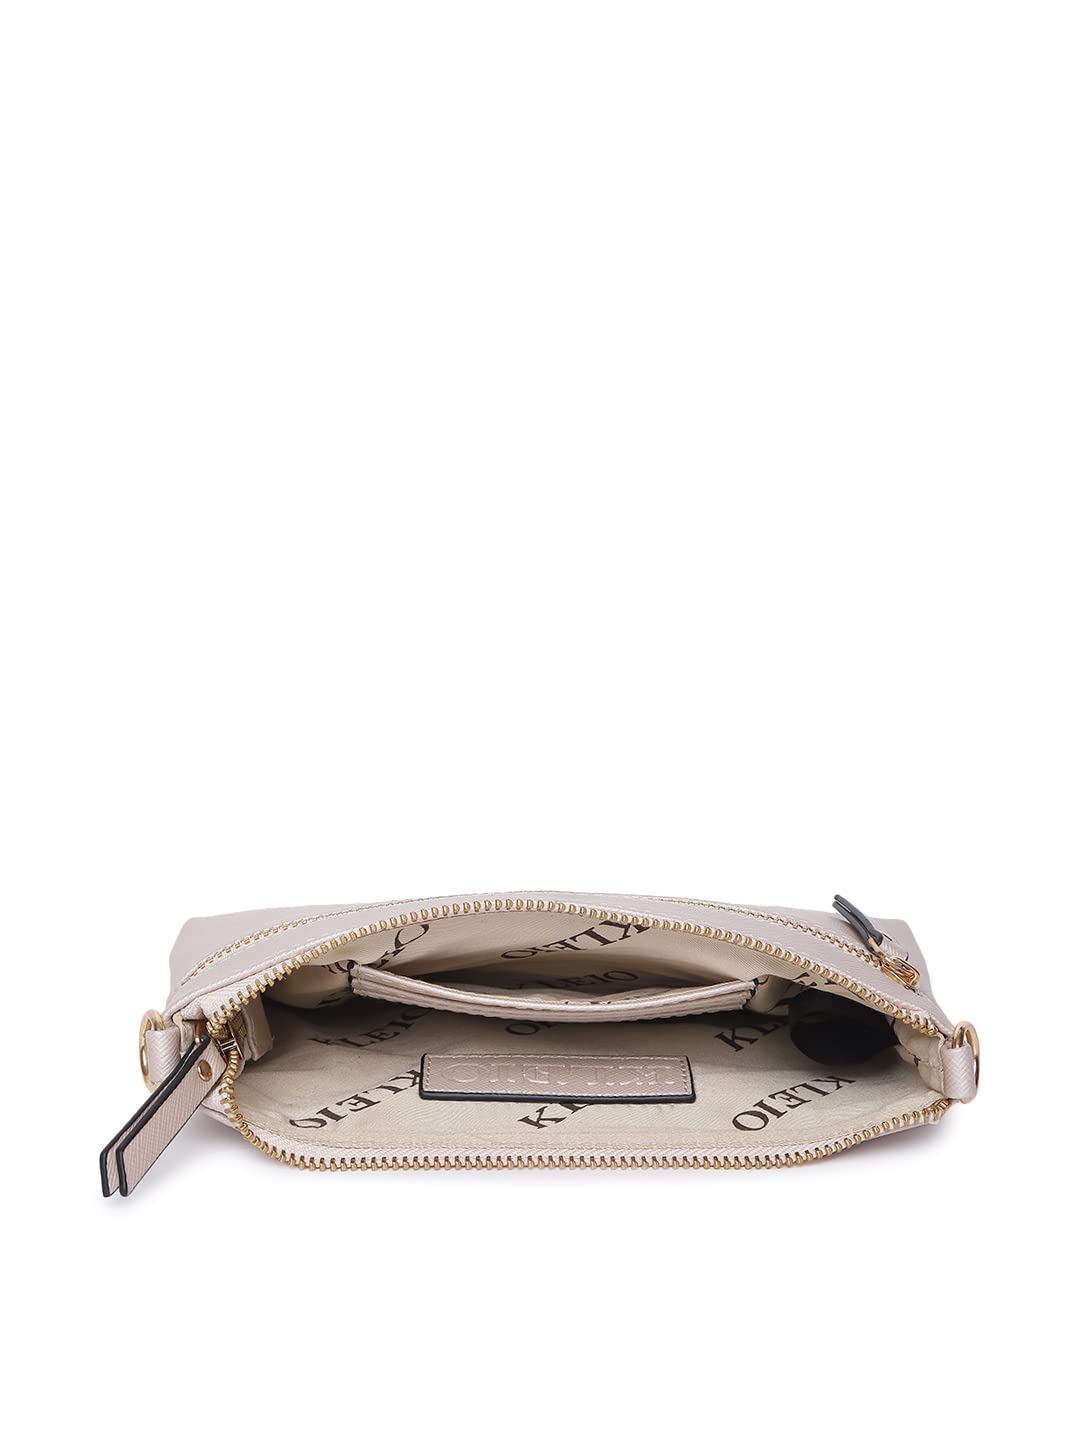 KLEIO Causal lightweight Short sling Shoulder Handbag for Women and Girls (Cream)